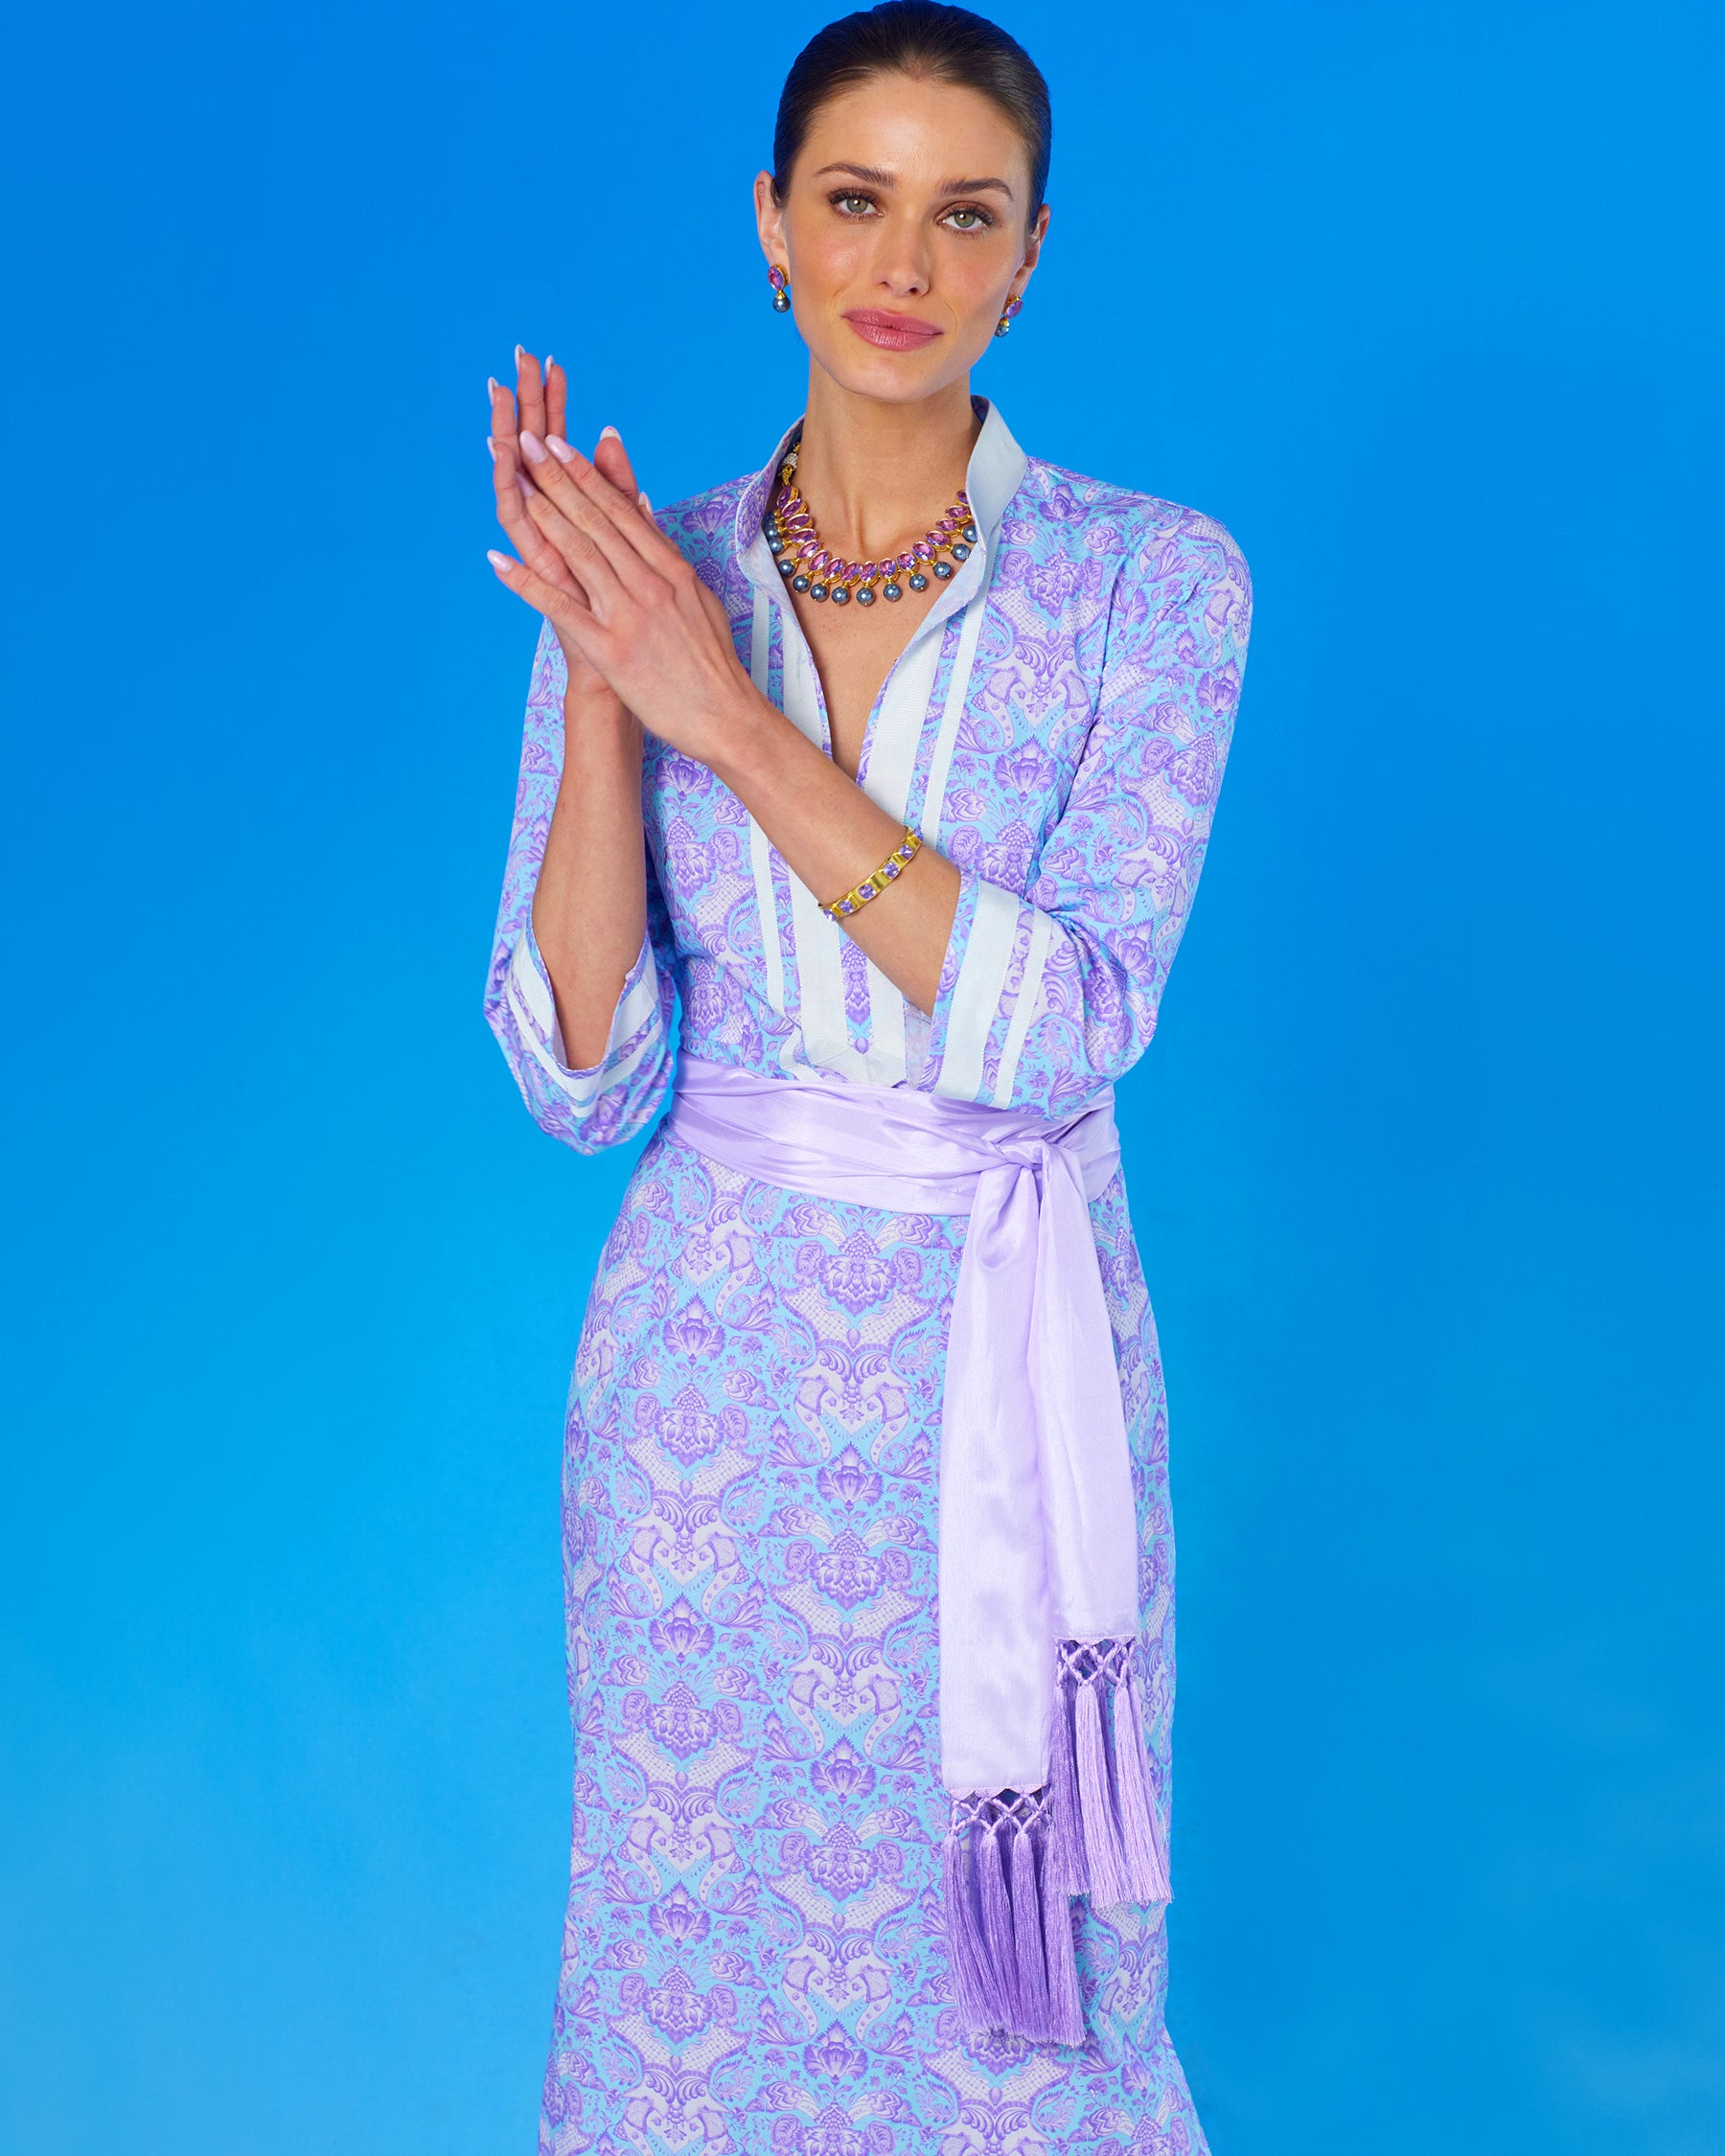 Cosima Sash Belt in Sunset Lavender worn with the Capri Long Tunic Dress in Lavender Shalimar